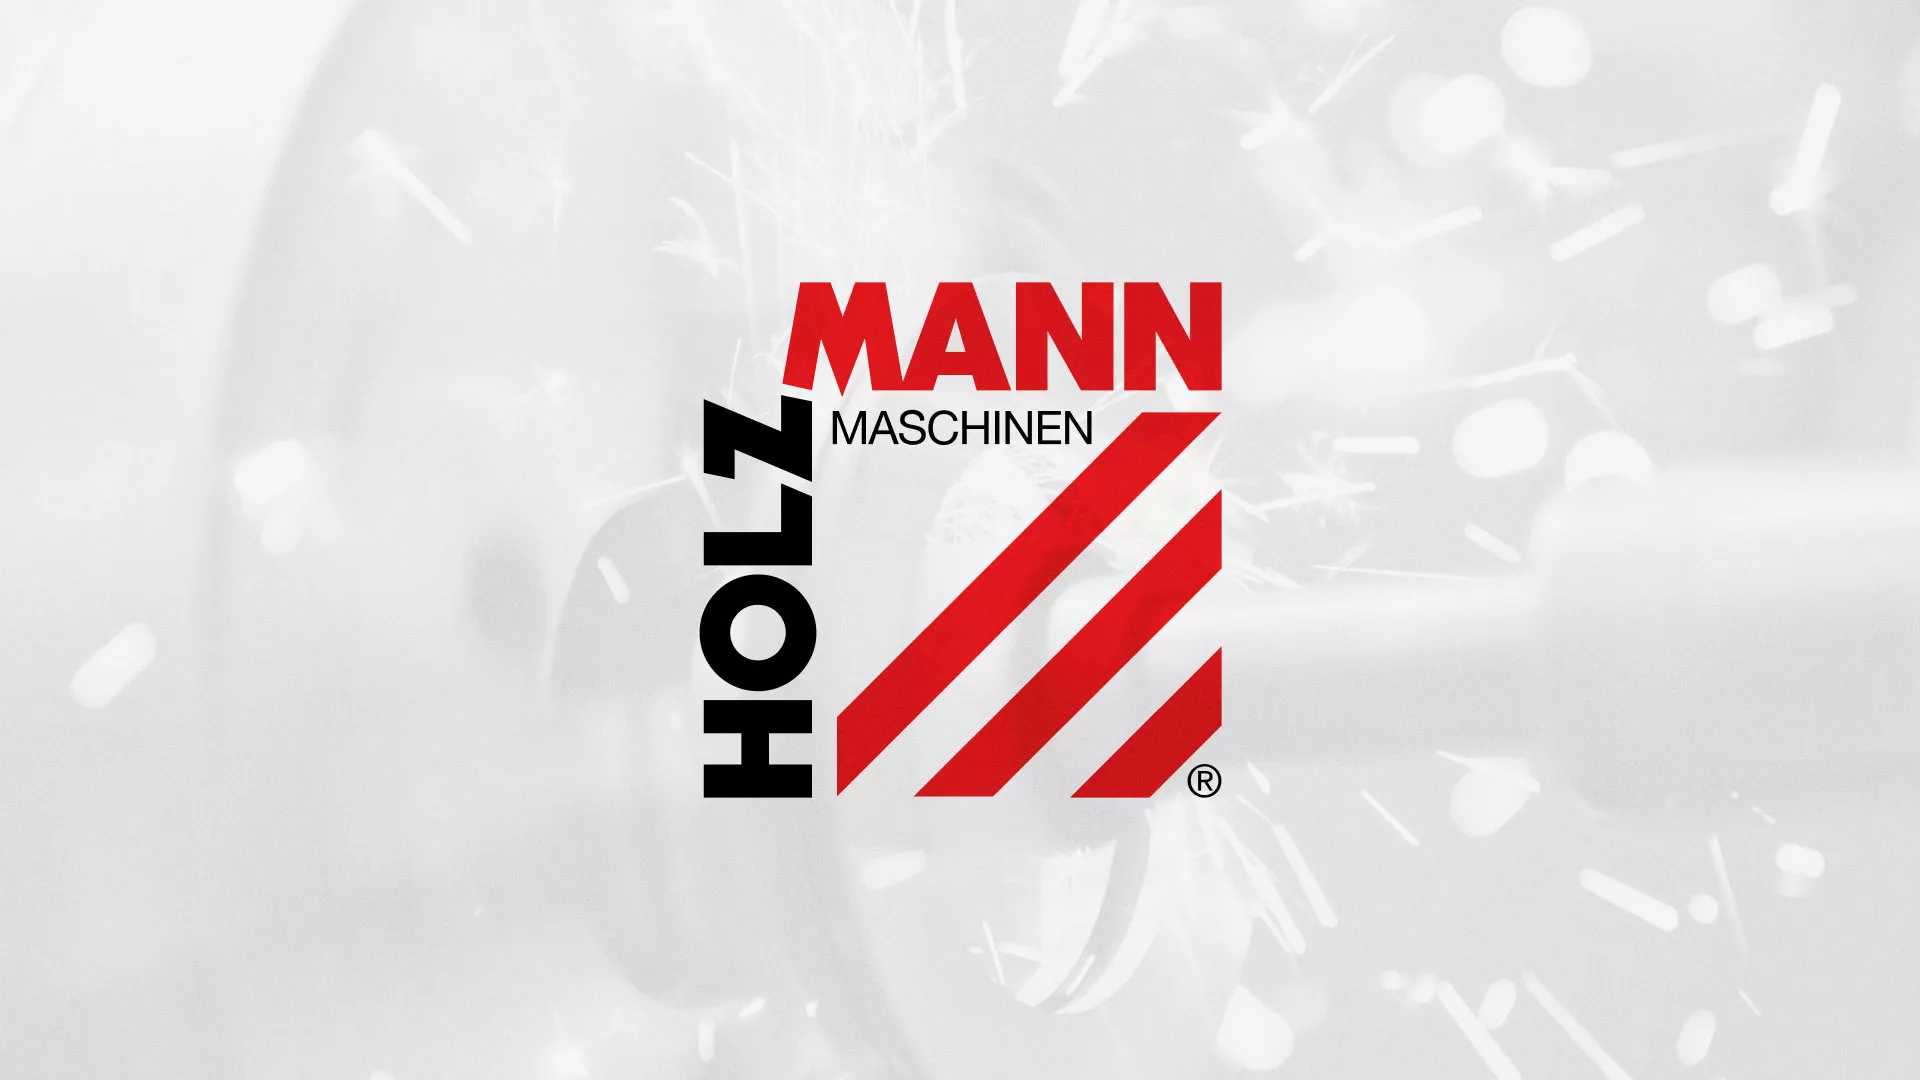 Создание сайта компании «HOLZMANN Maschinen GmbH» в Данилове